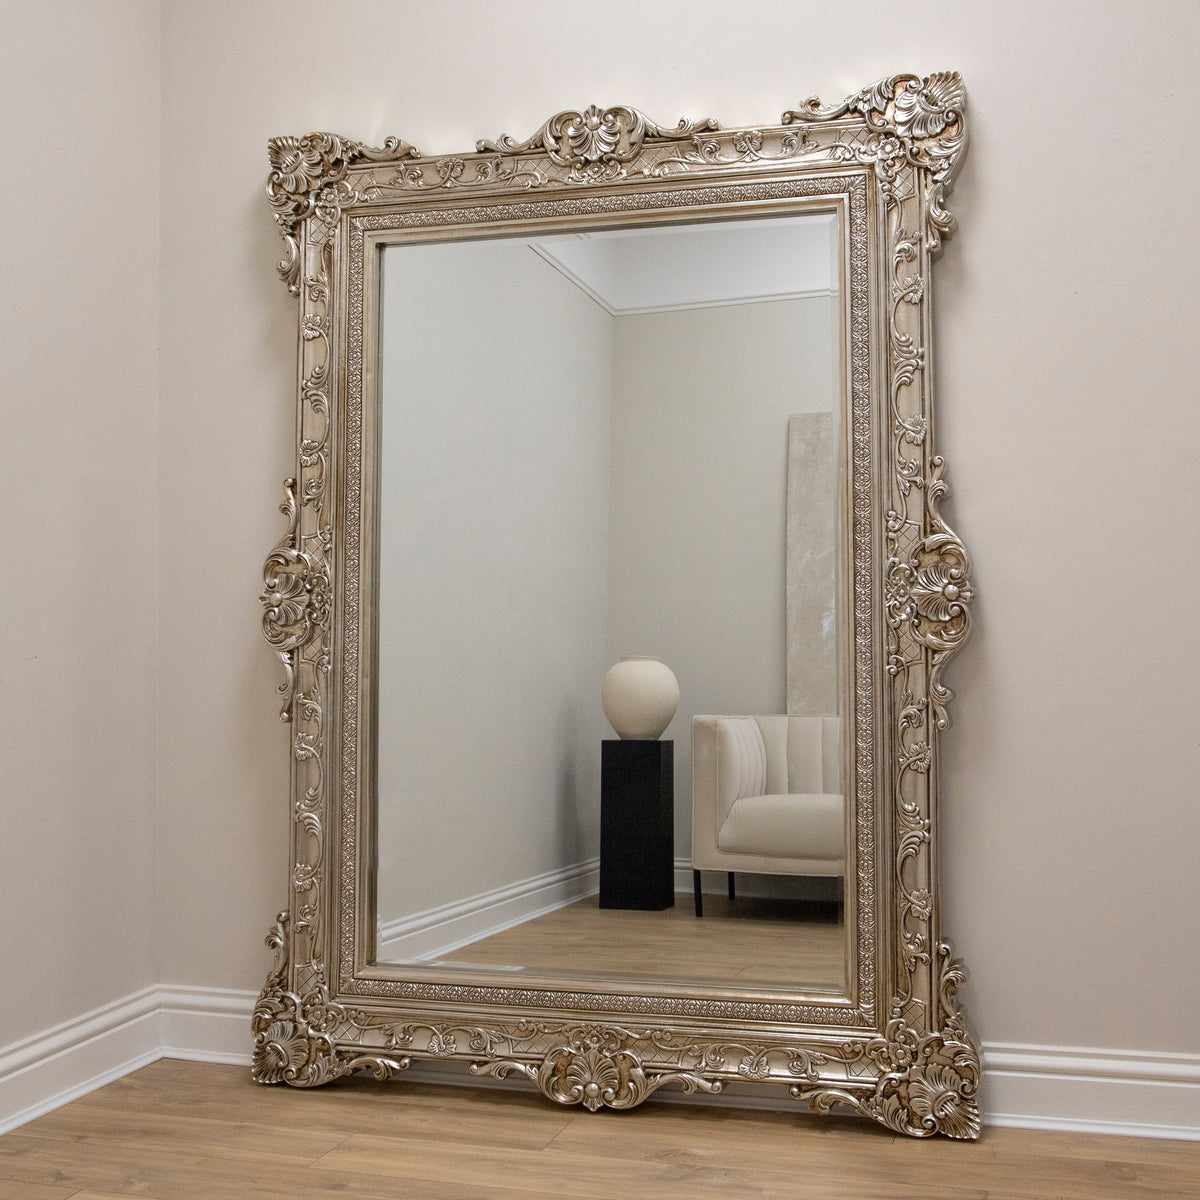 Ella Grande - Champagne Ornate Floor Mirror 190cm x 140cm